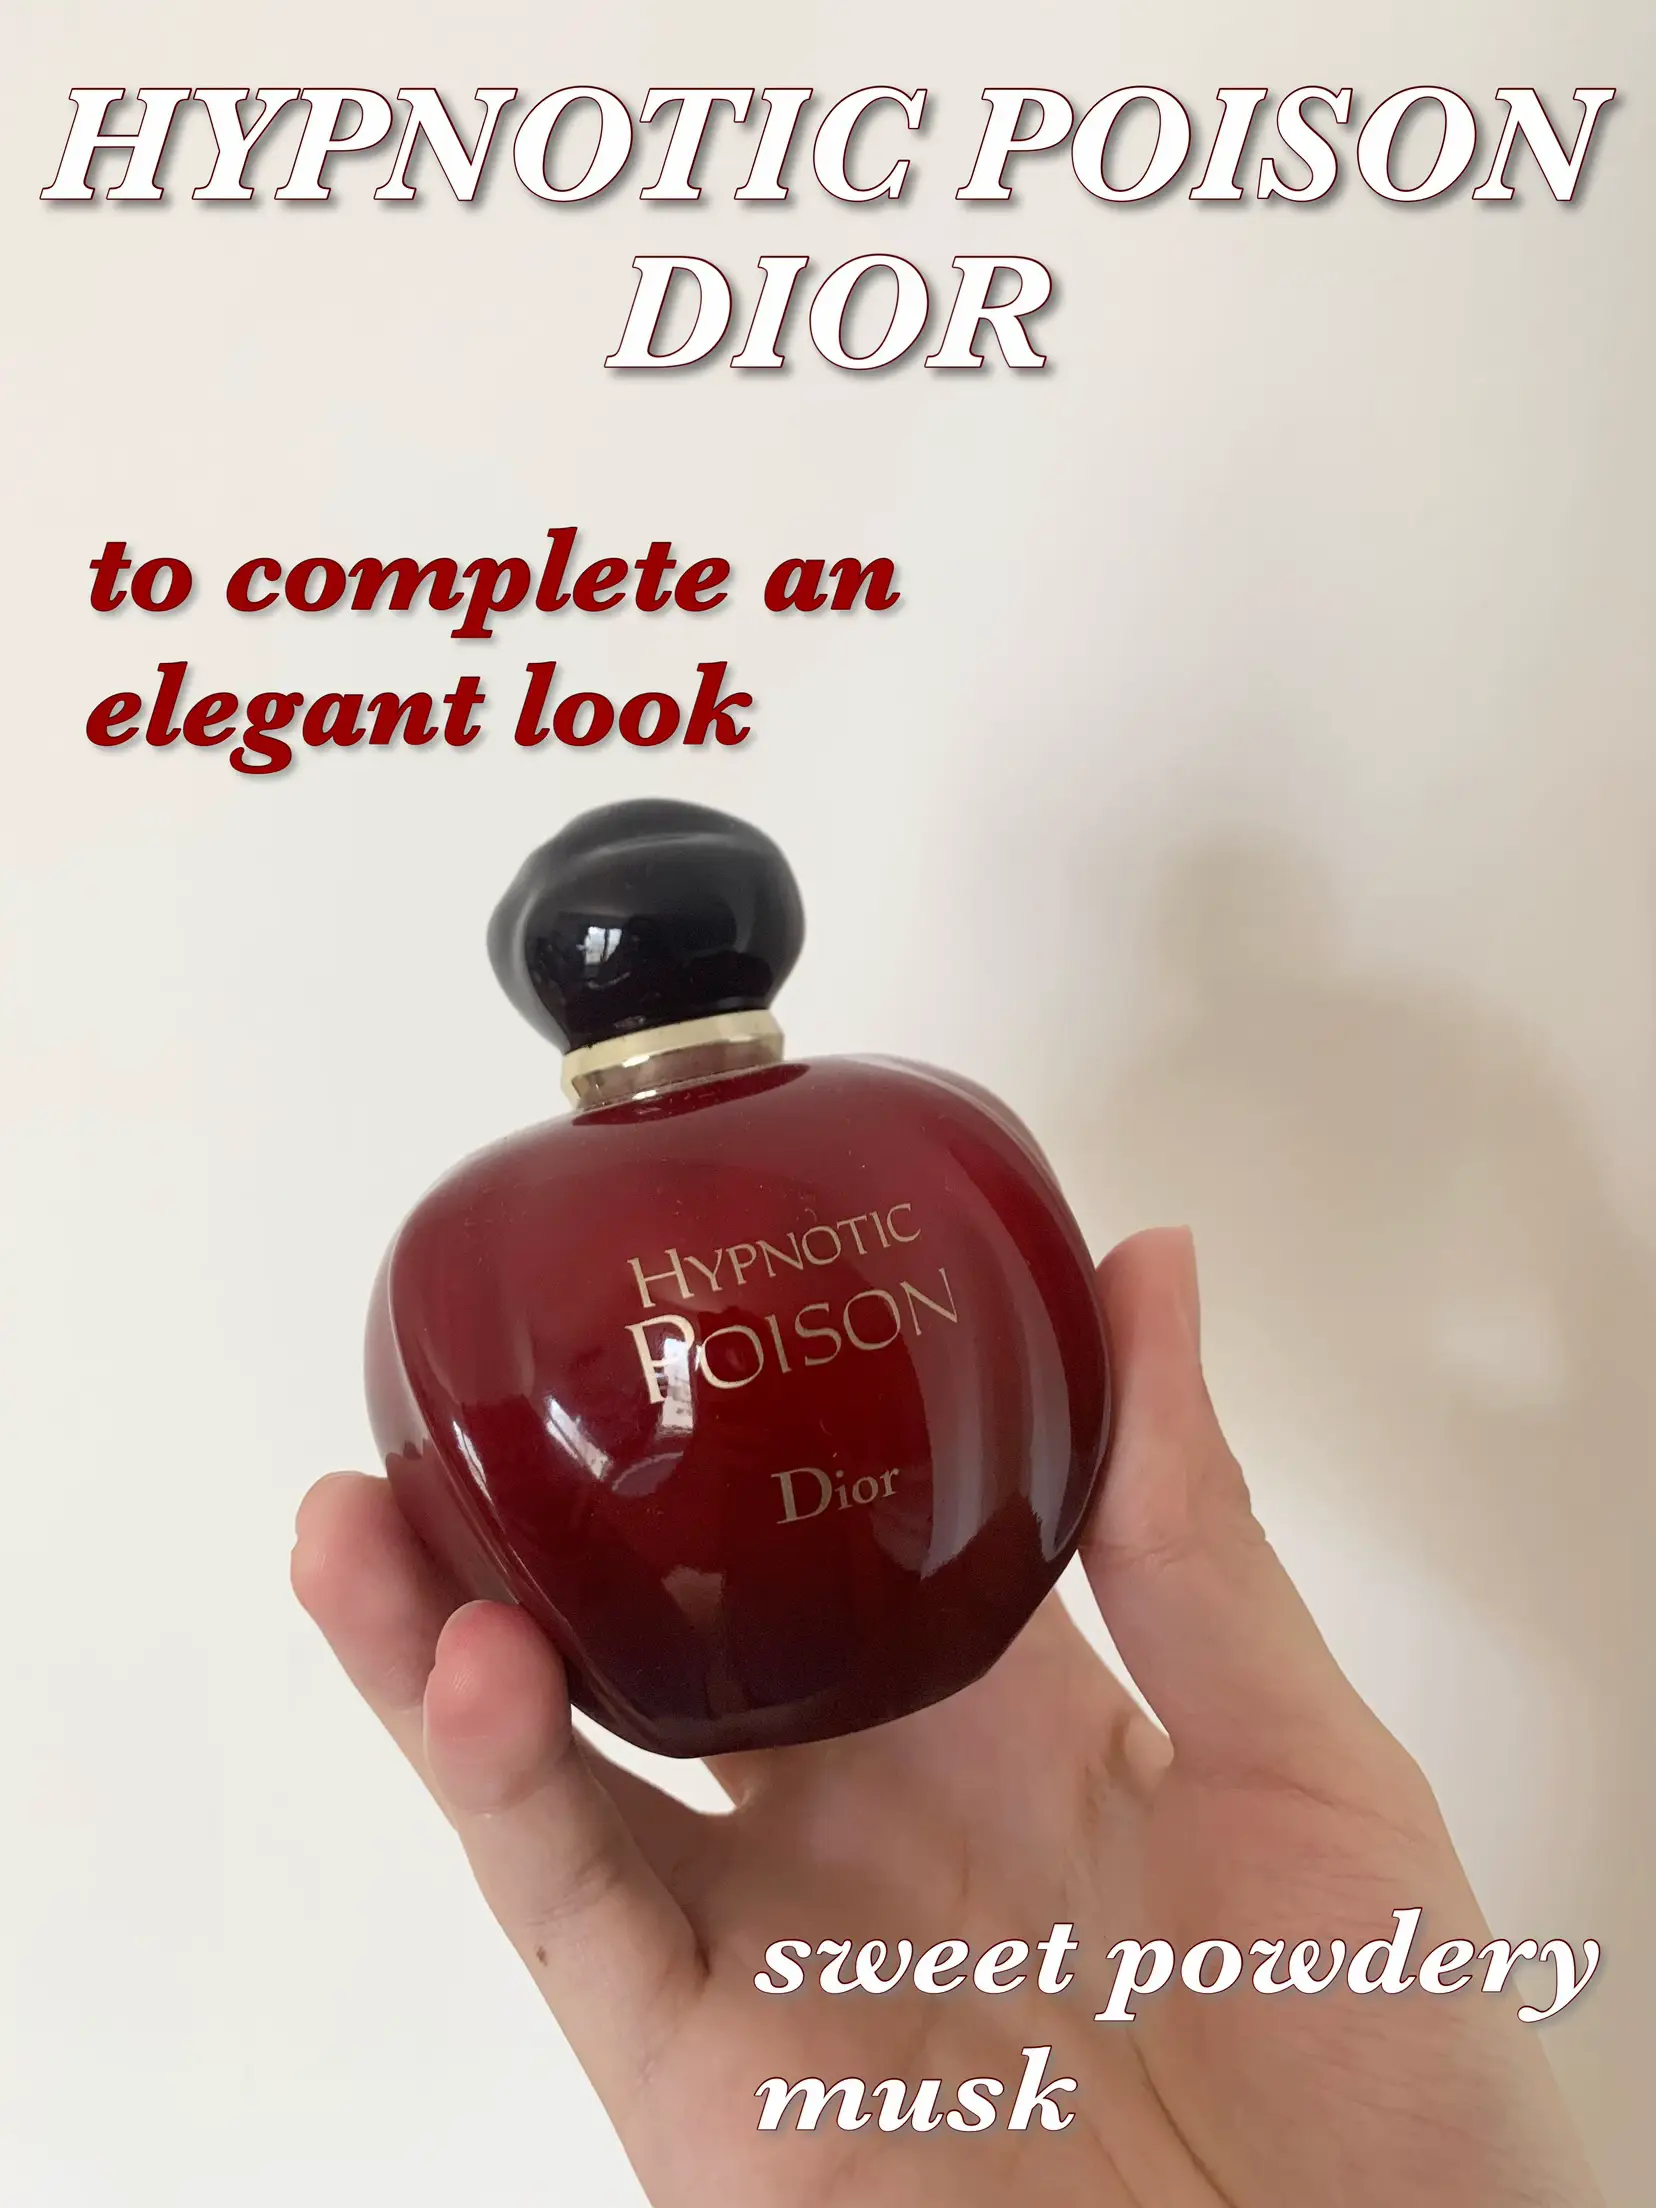 Christian Dior HYPNOTIC POISON eau de parfum REVIEW - a syrupy fragrance 